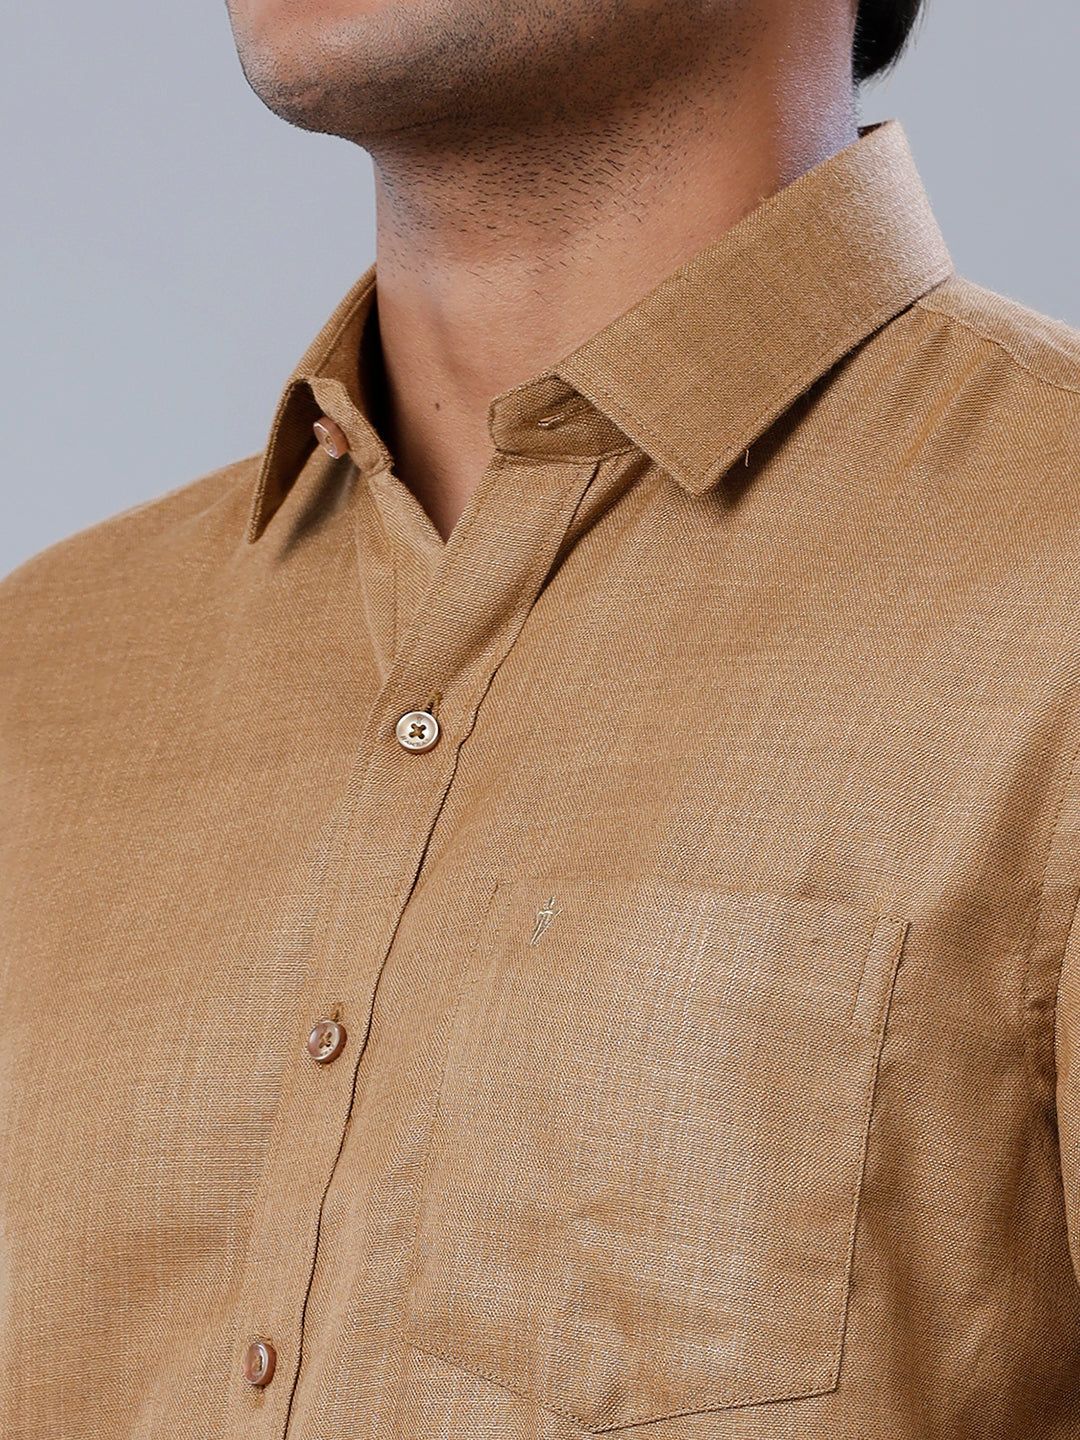 Mens Formal Shirt Half Sleeves Dark Brown T41 TQ6-Zoom view